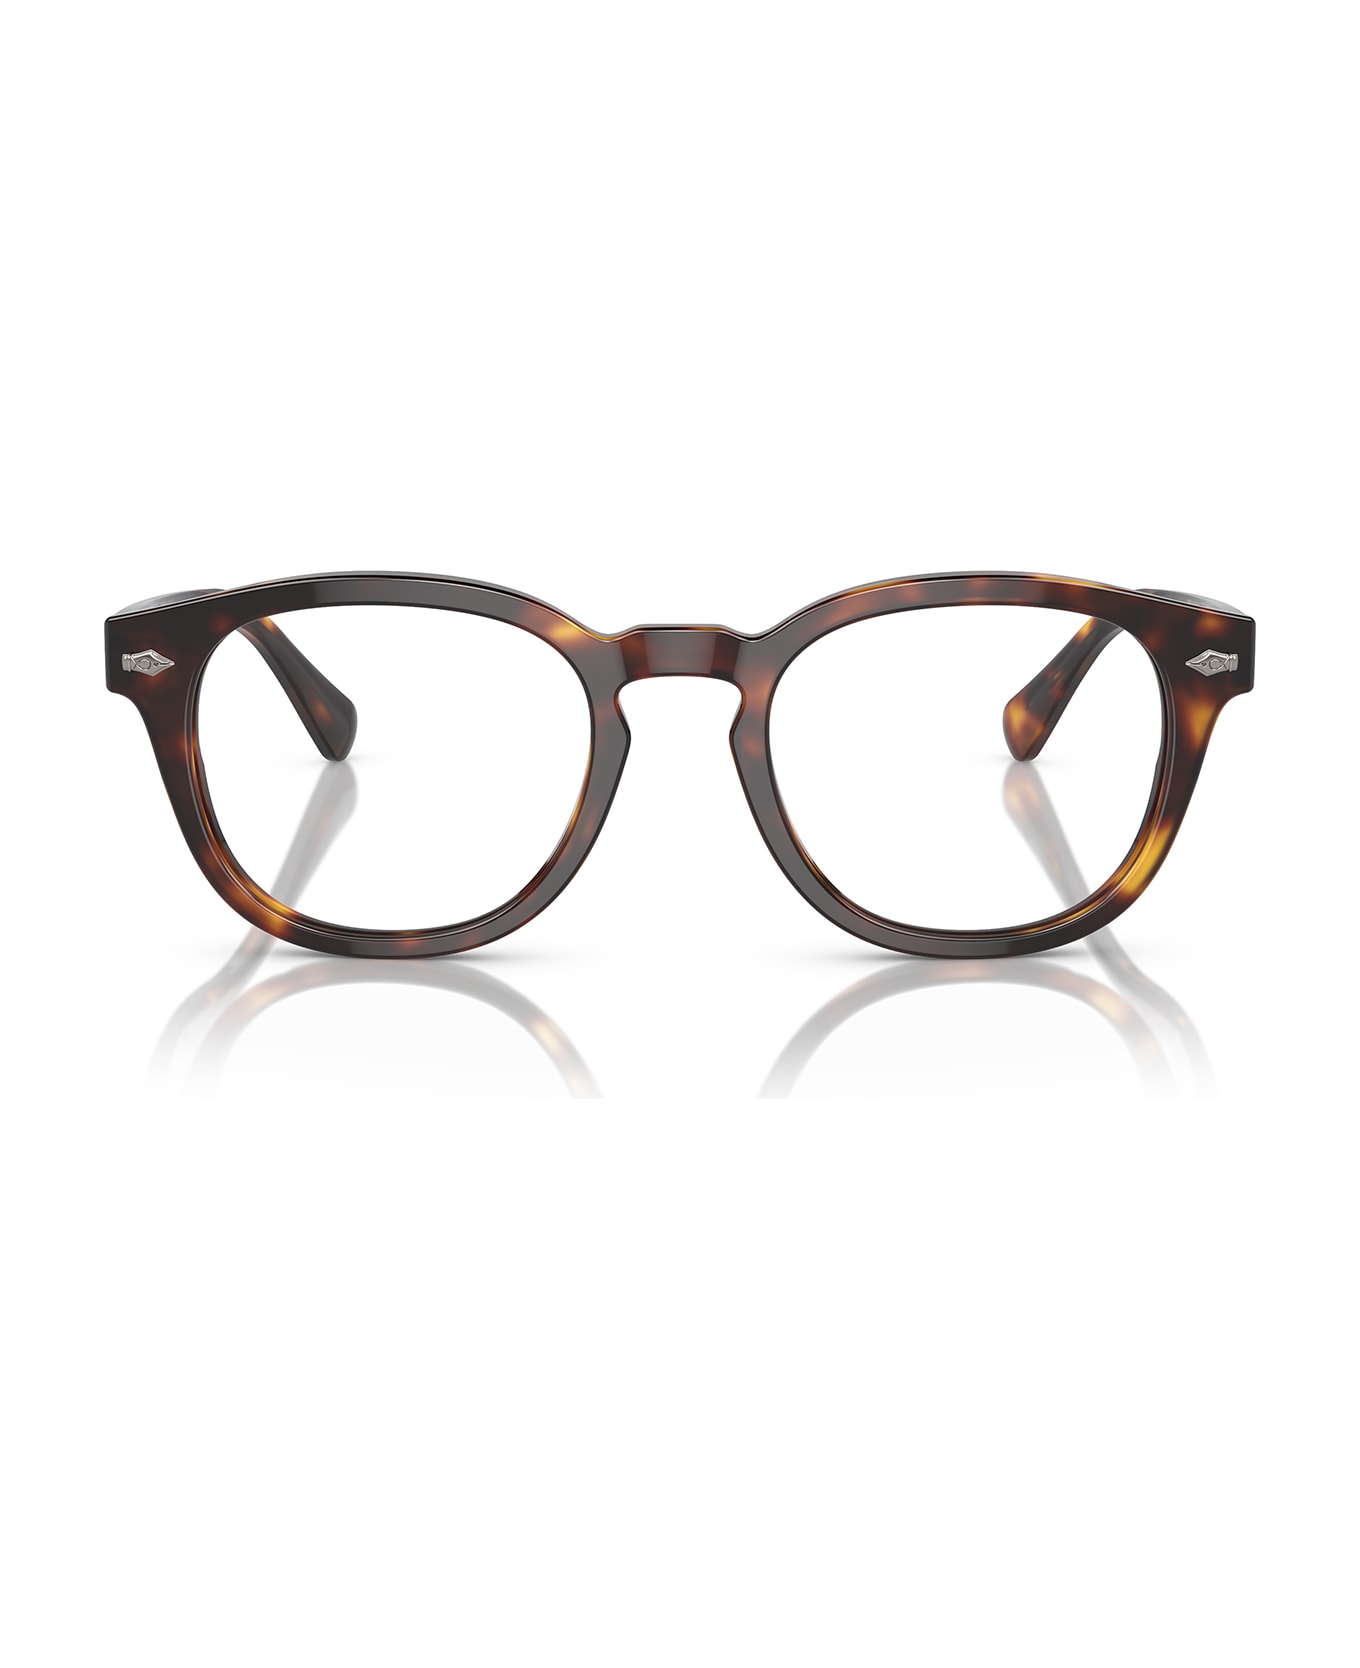 Polo Ralph Lauren Ph2272 Shiny Brown Tortoise Glasses - Shiny Brown Tortoise